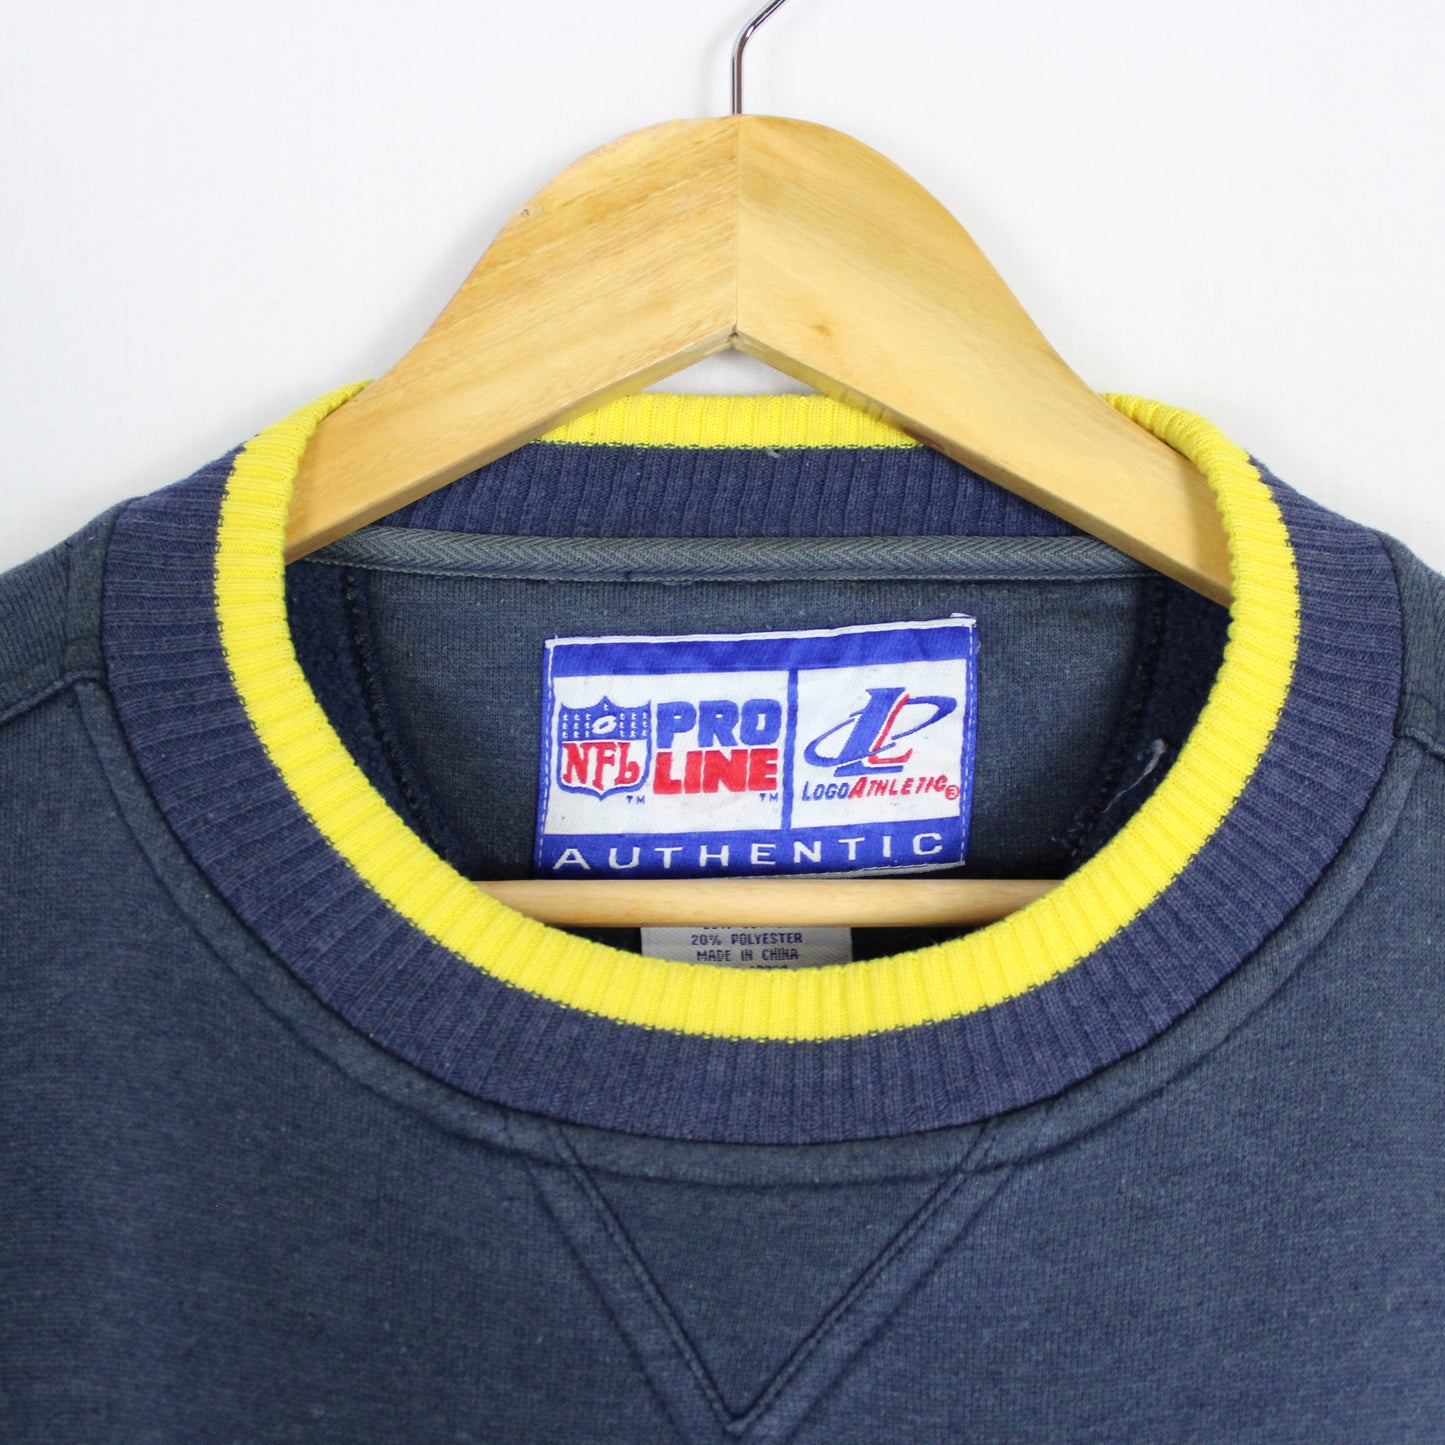 Vintage 90's San Diego Chargers NFL Sweatshirt - XL